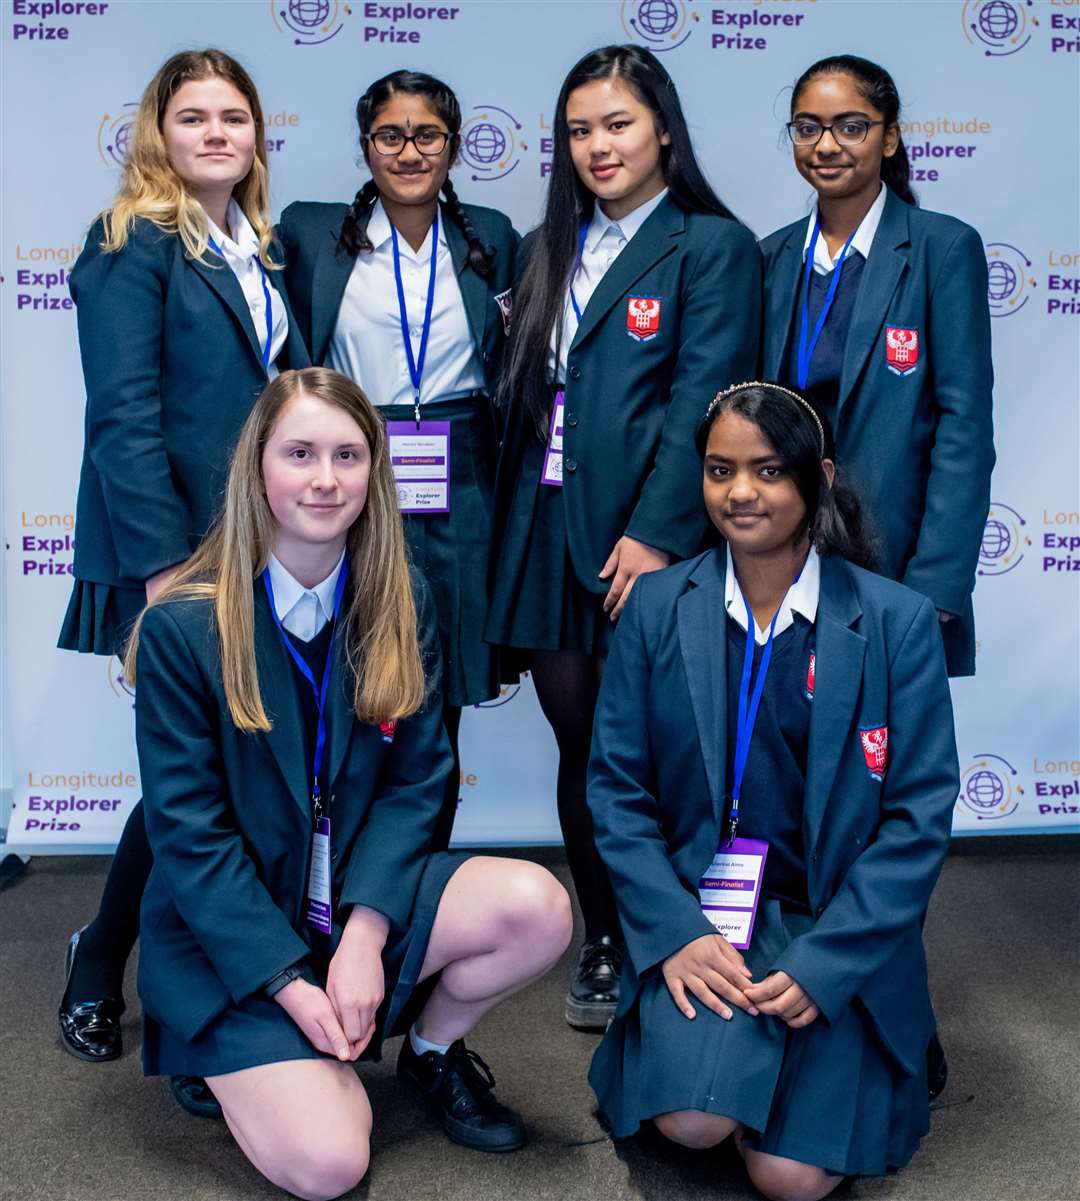 Dover Grammar School For Girls reach finals of Girls Longitude Explorer